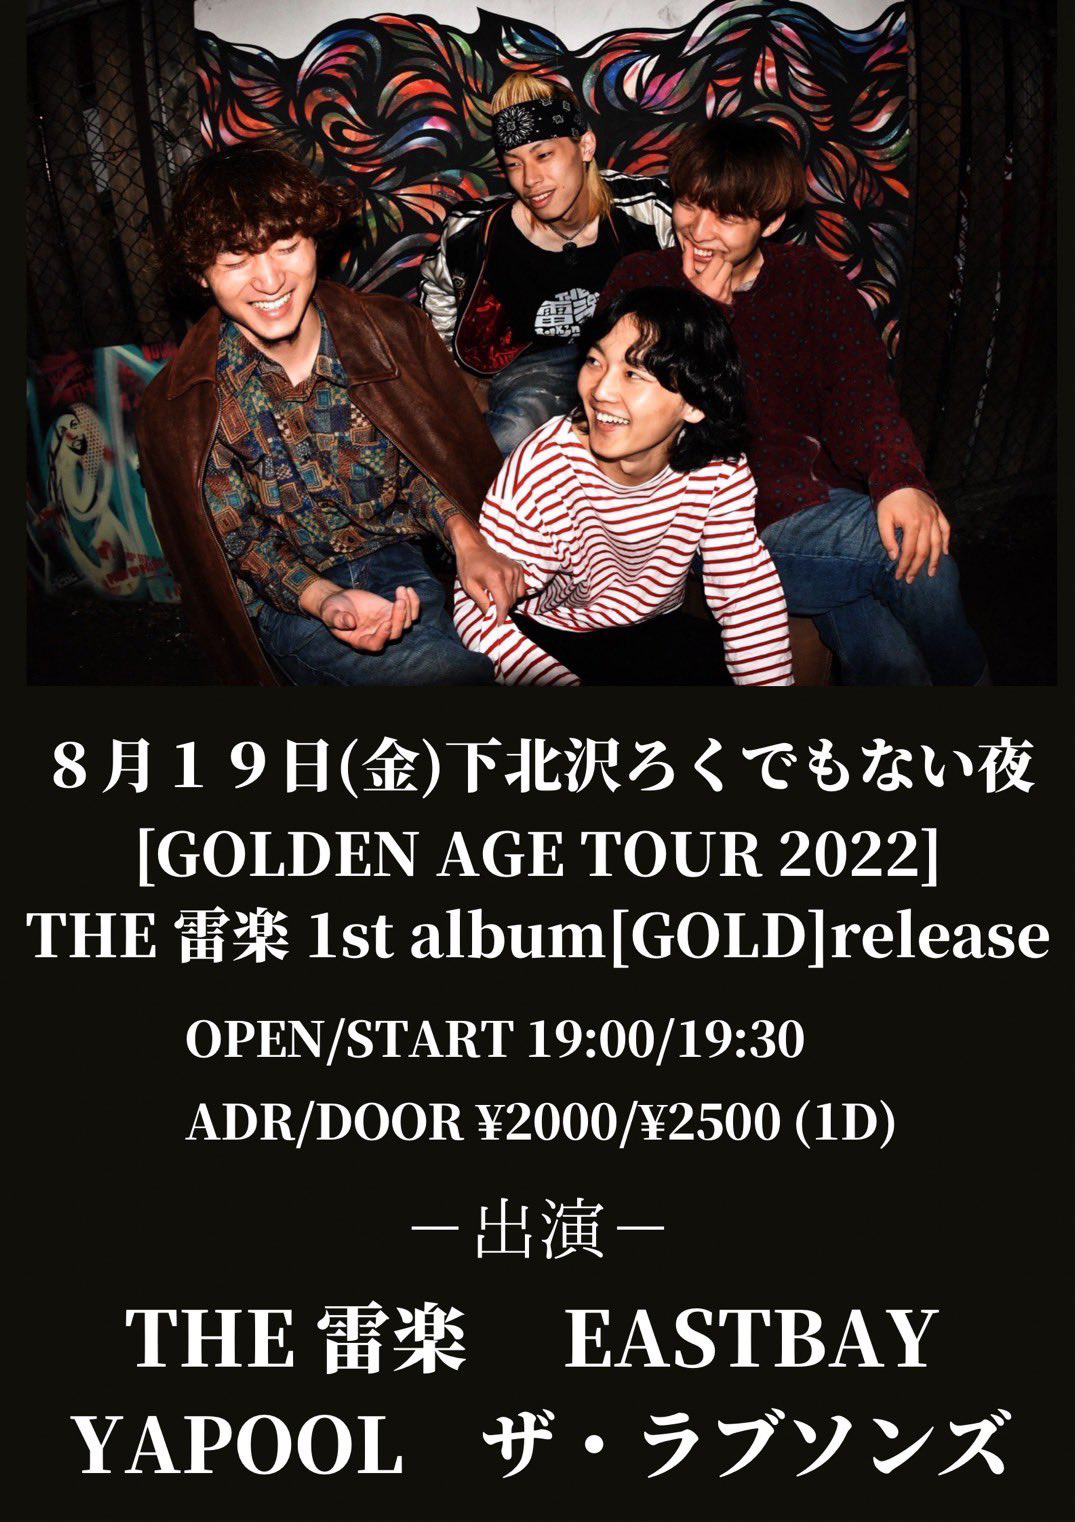 THE 雷楽 1st album [GOLD] release [GOLDEN AGE TOUR 2022]の写真